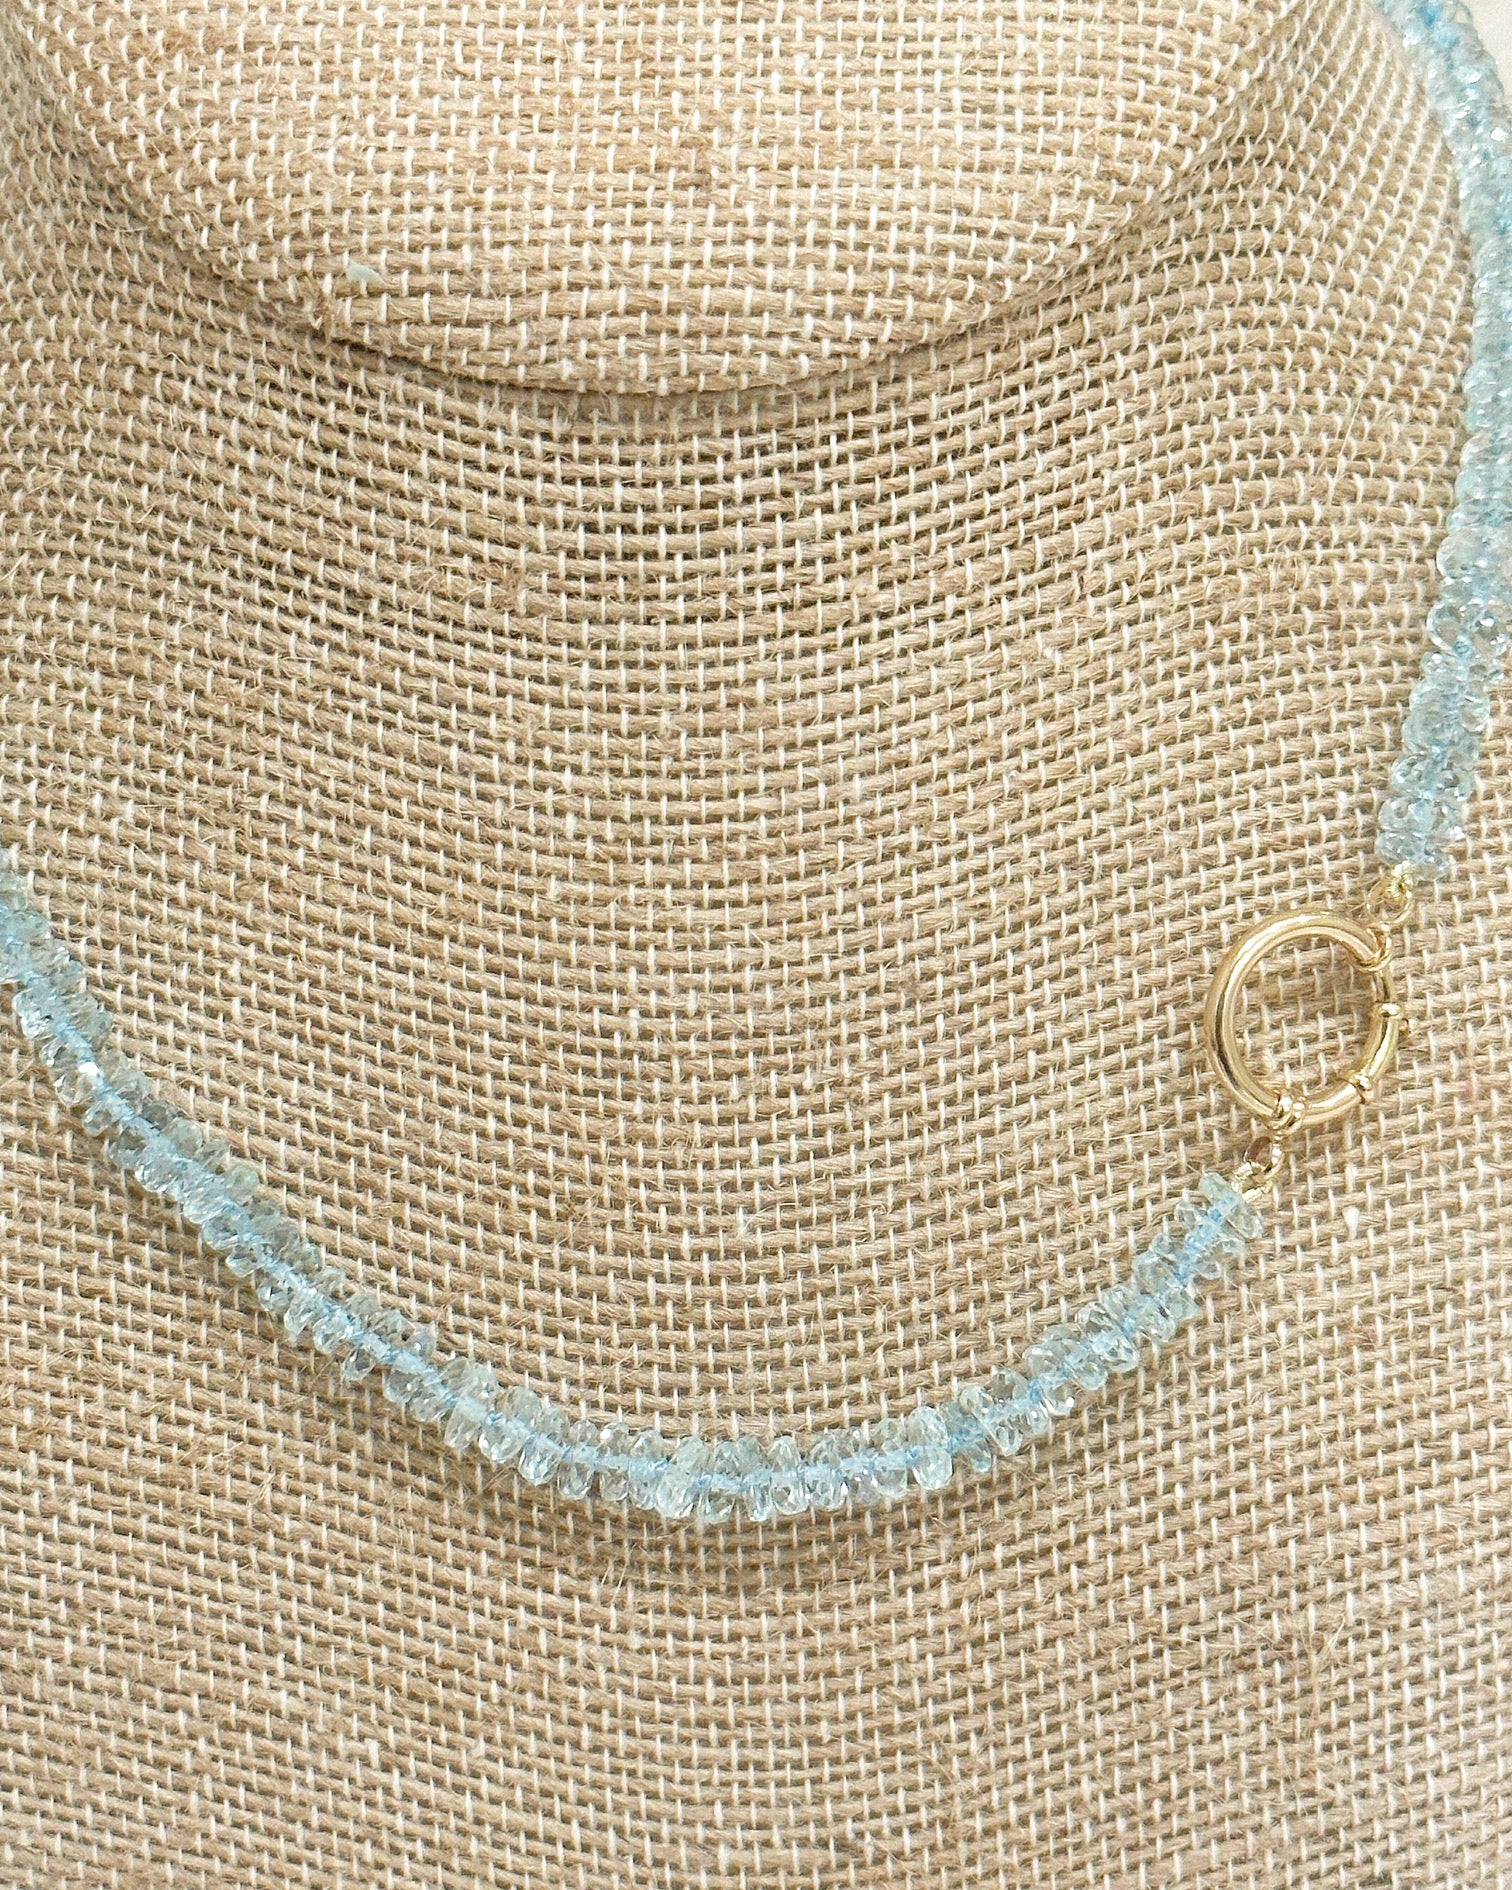 14K Gold Sky Blue Aquamarine Necklace